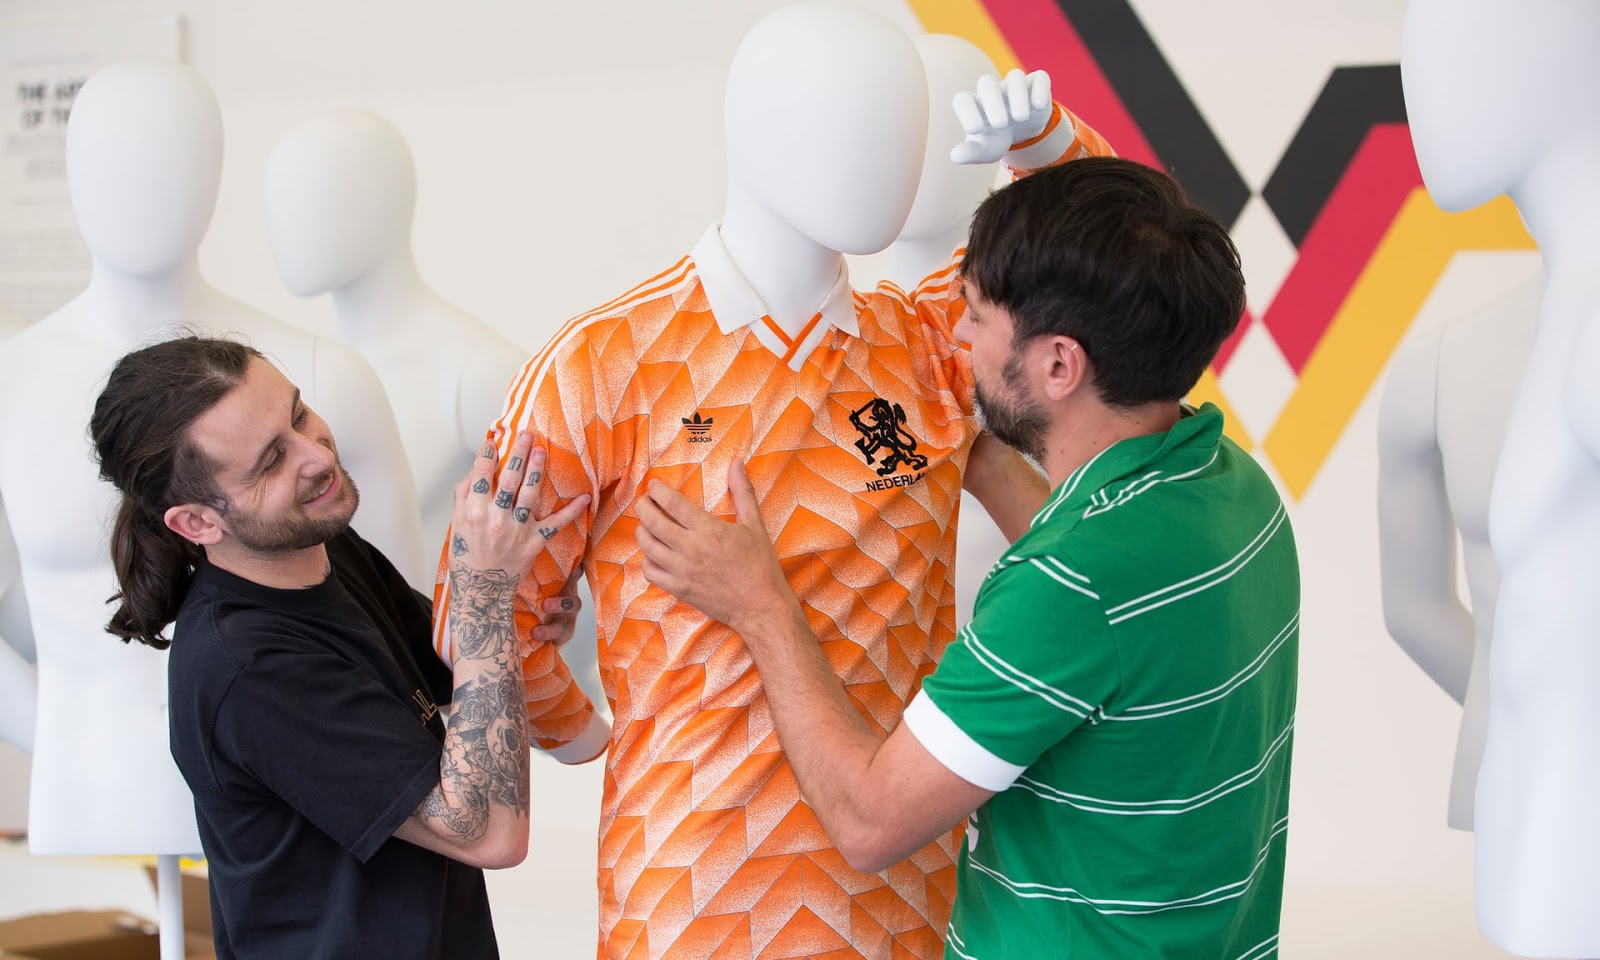 PSG x Louis Vuitton Away Kit - FIFA Kit Creator Showcase